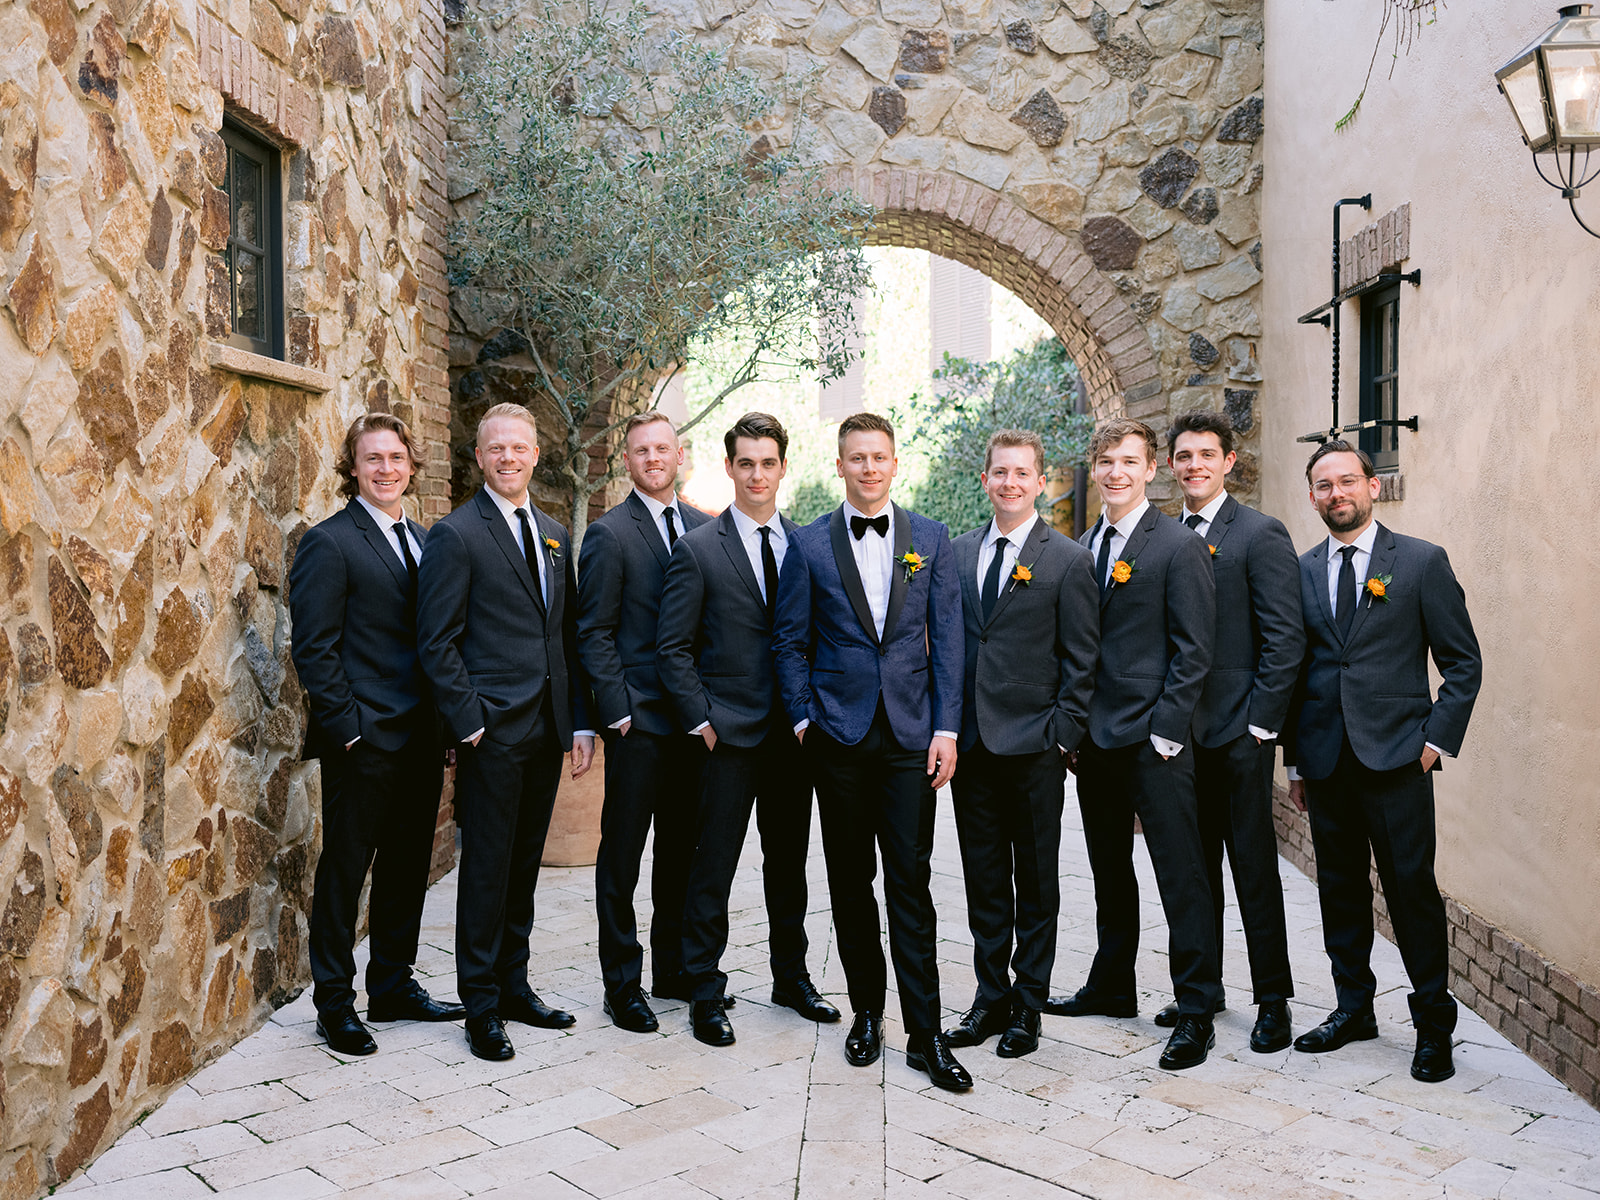 Groom and groomsmen group photo at Bella Collina.